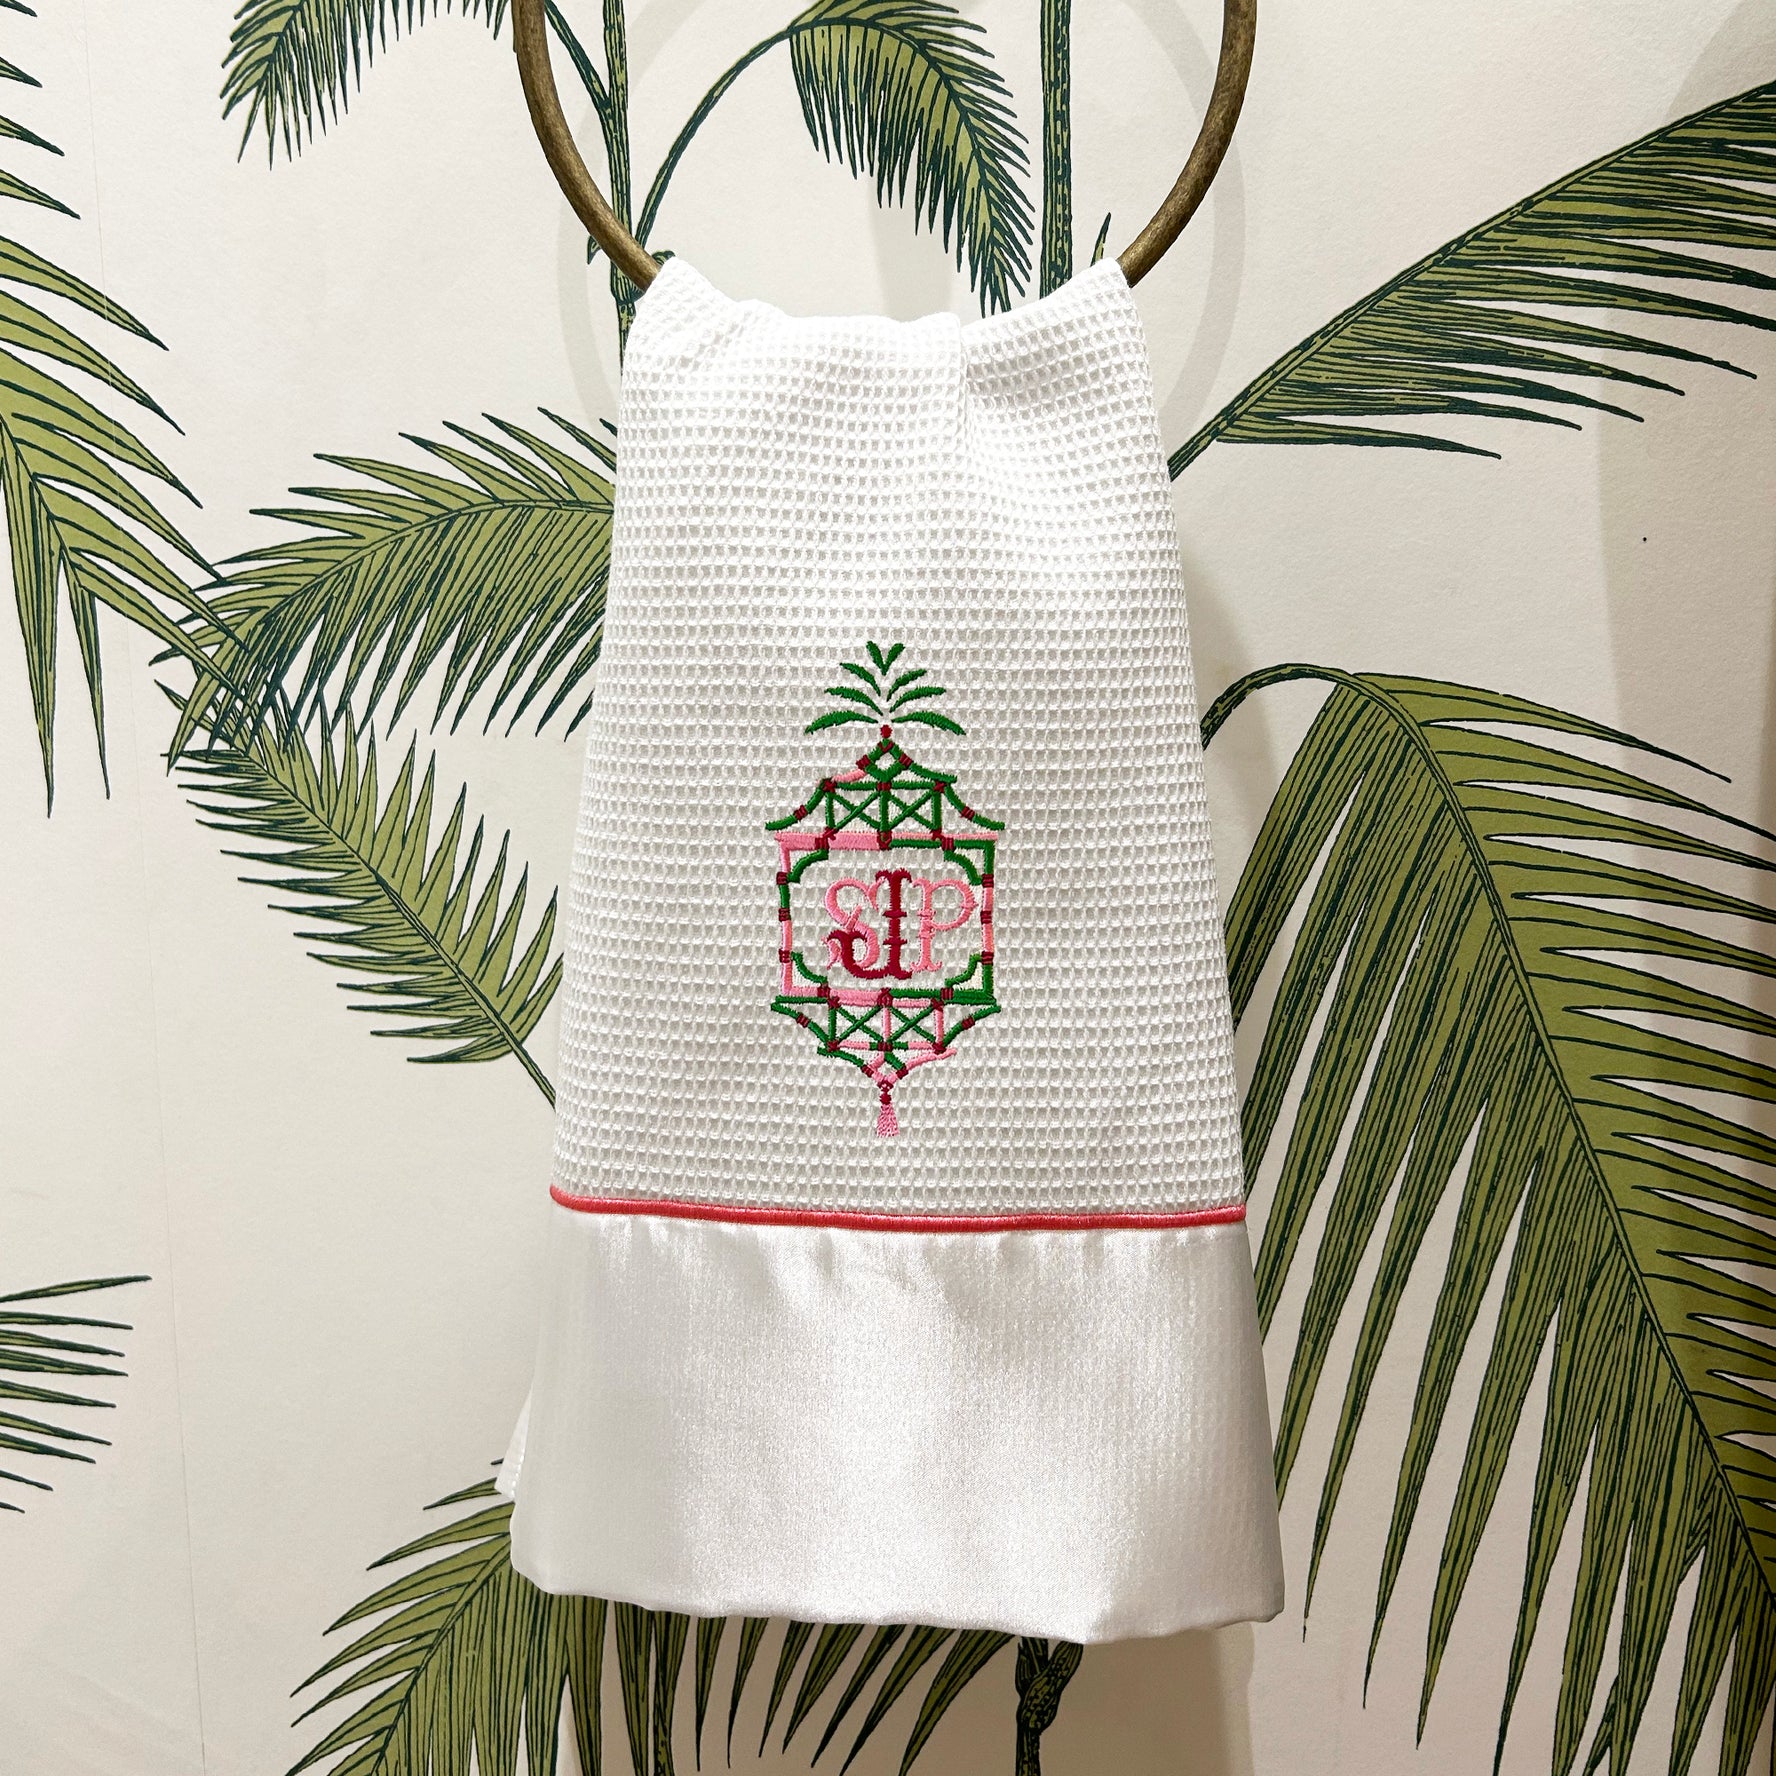 Embroidered Monogramed Luxury Bathroom Hand Towels